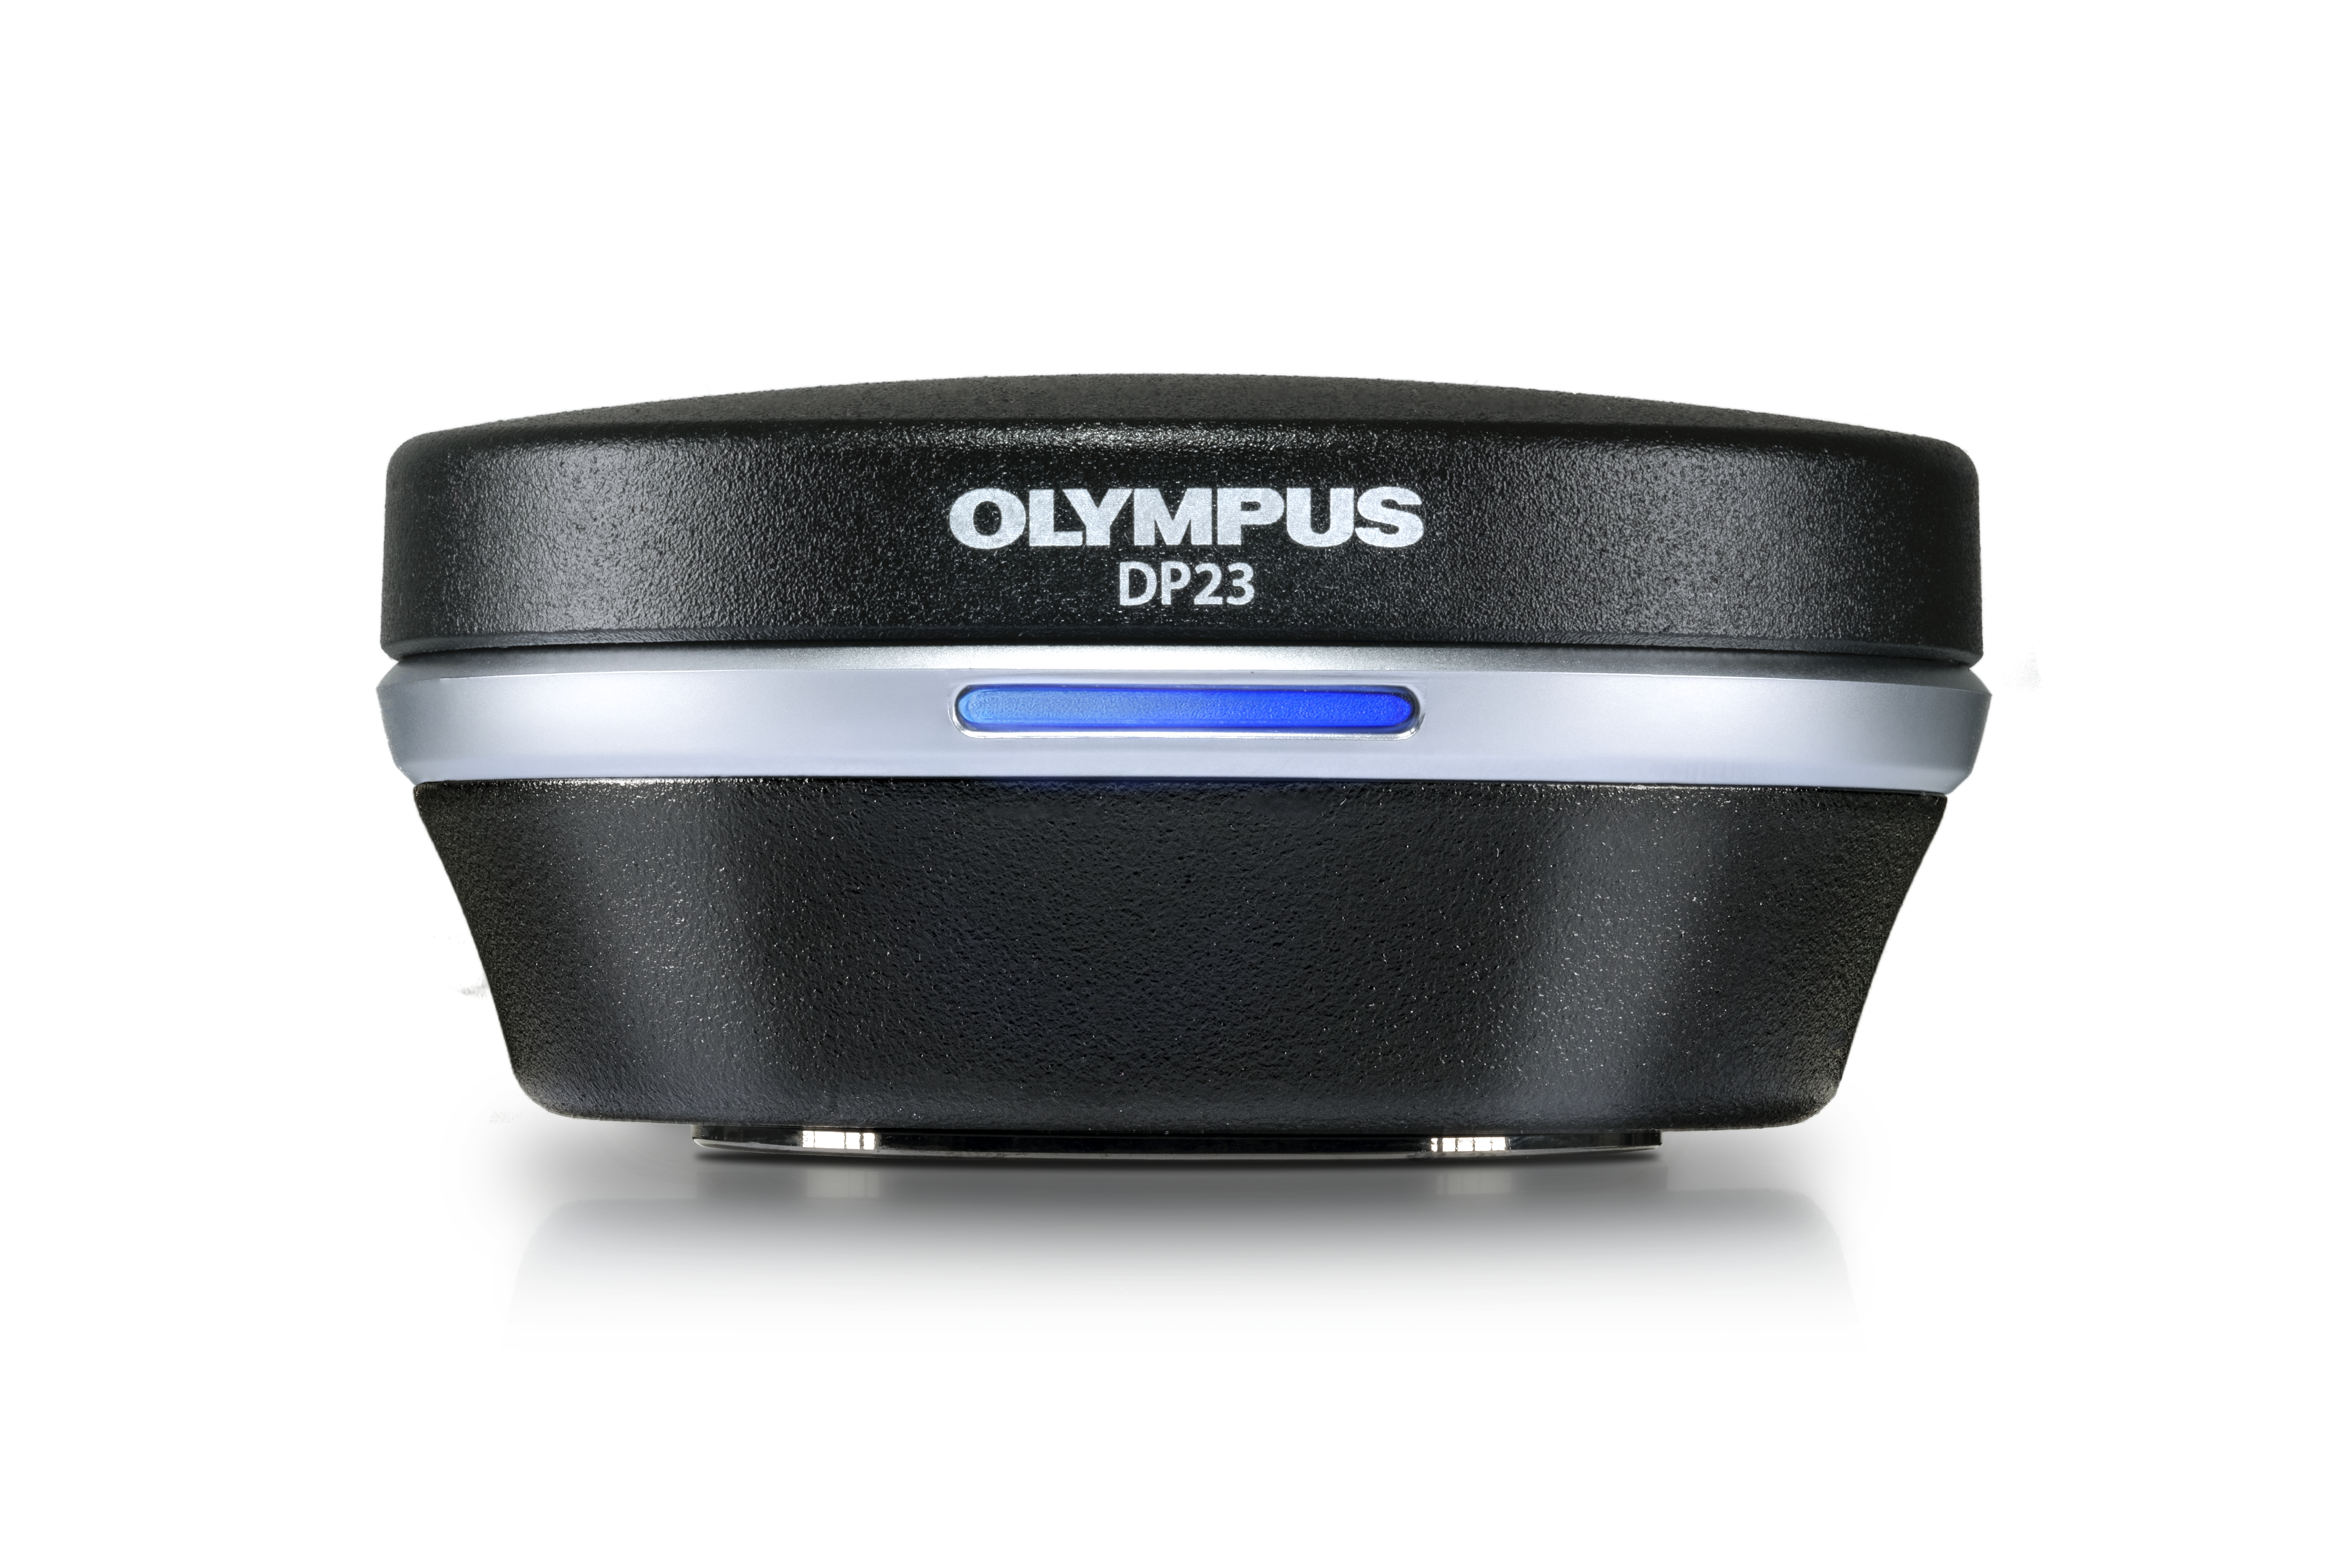 Olympus의 DP23 디지털 현미경 카메라